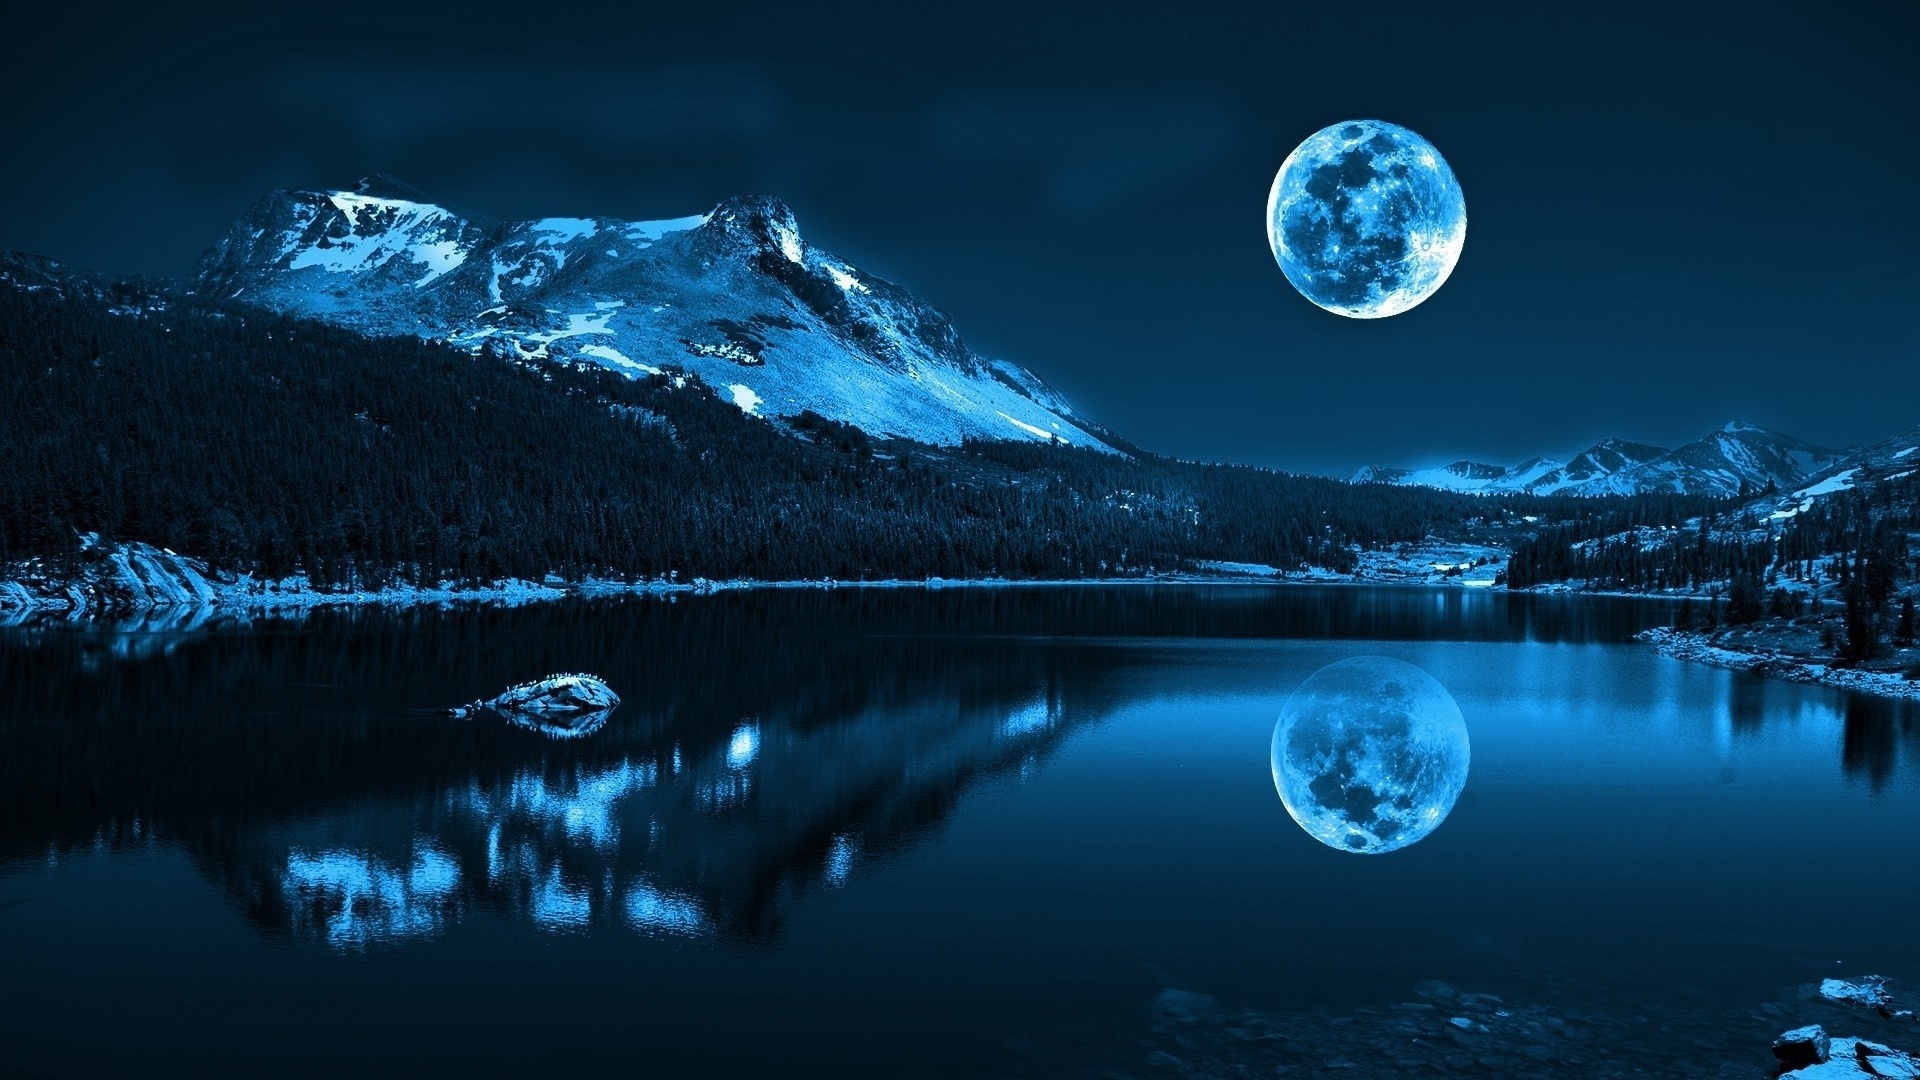 Moon-lake-mountains-cold-night-nature-scenery_1920x1080.jpg